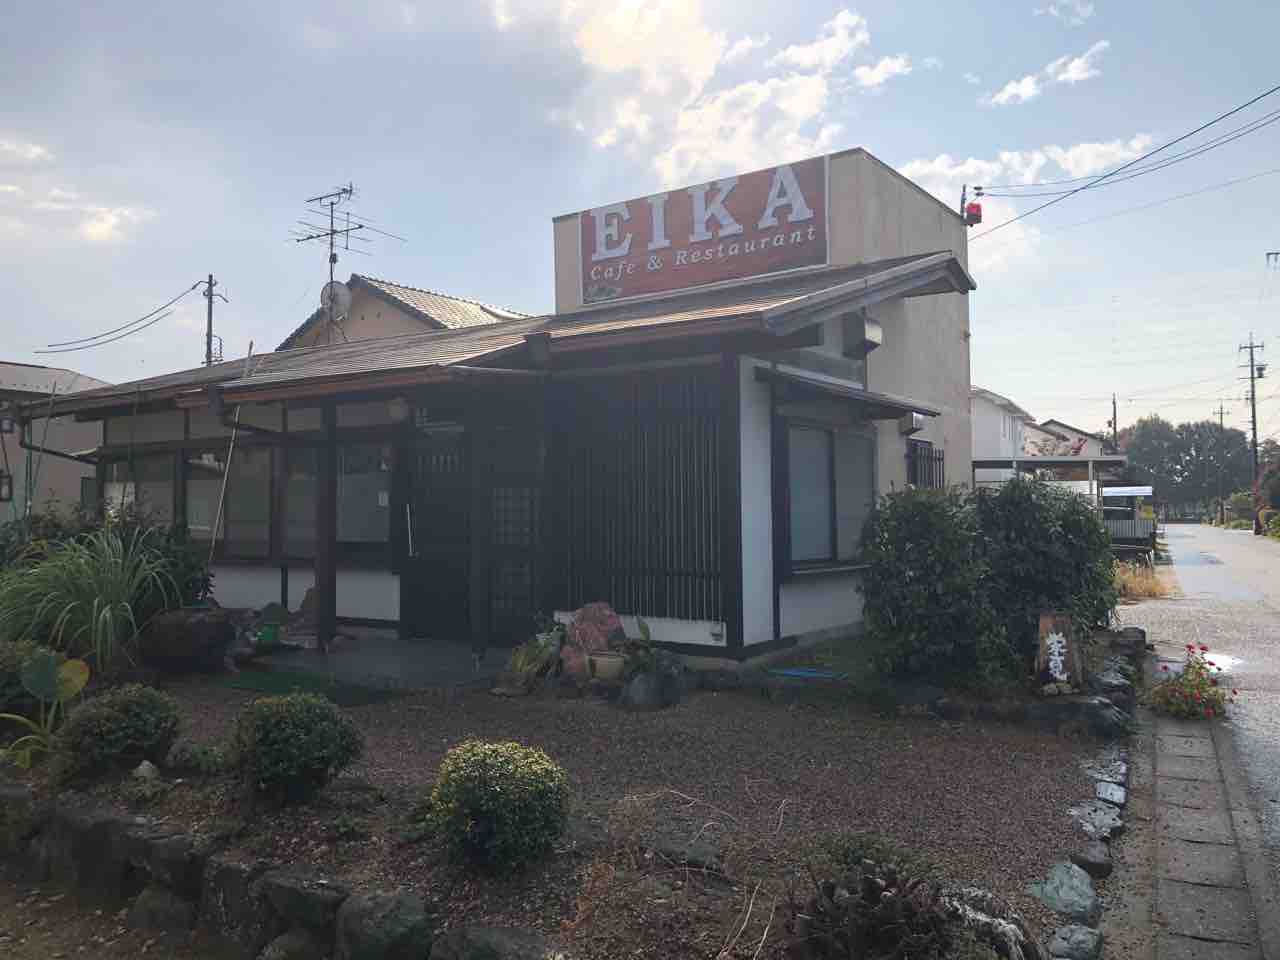 『EIKA Cafe ＆ Restaurant』